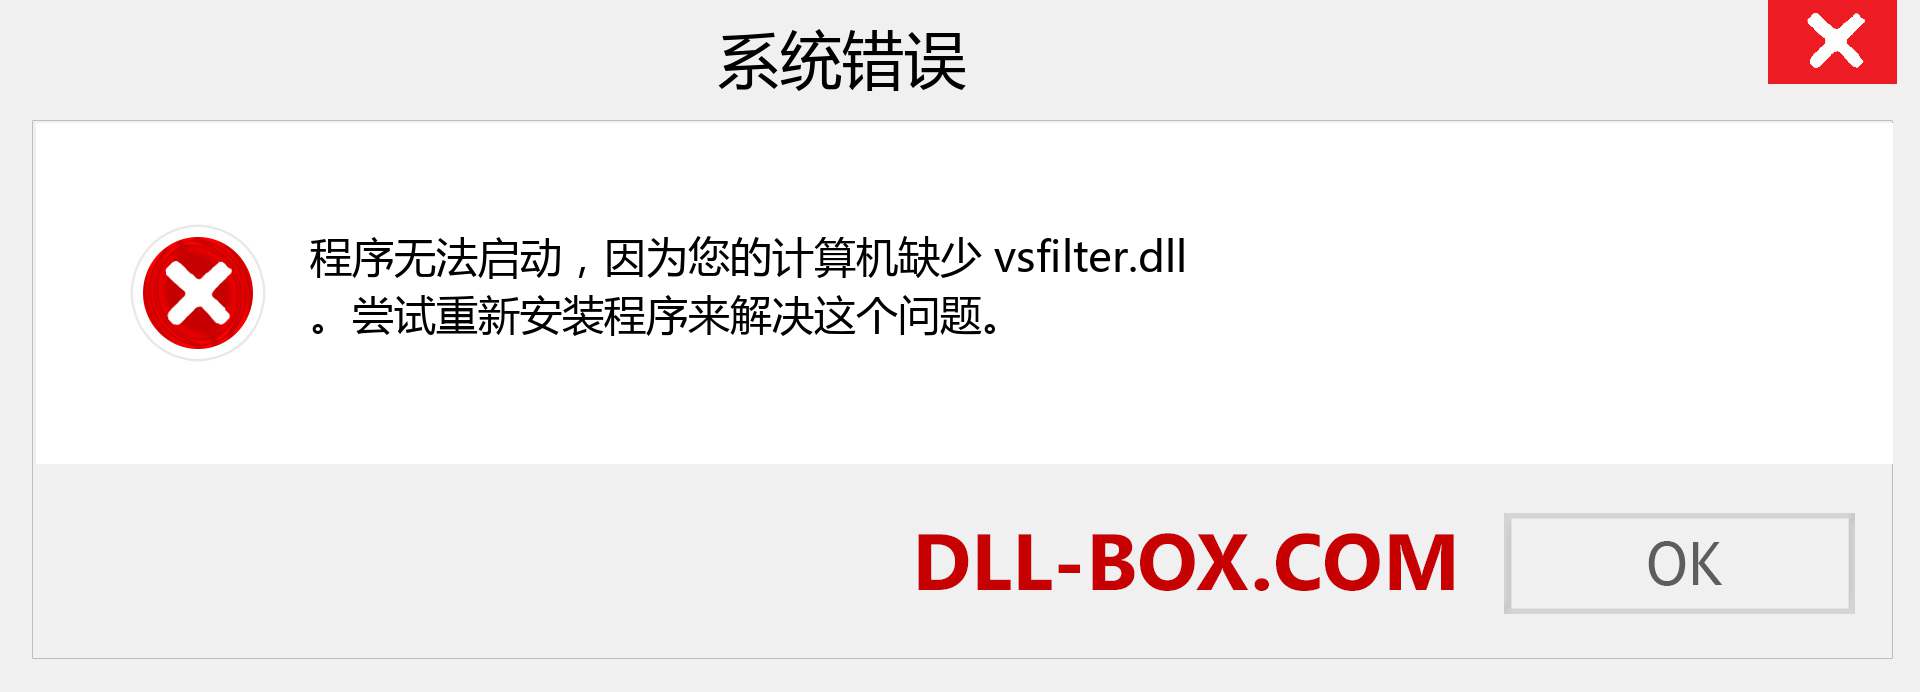 vsfilter.dll 文件丢失？。 适用于 Windows 7、8、10 的下载 - 修复 Windows、照片、图像上的 vsfilter dll 丢失错误